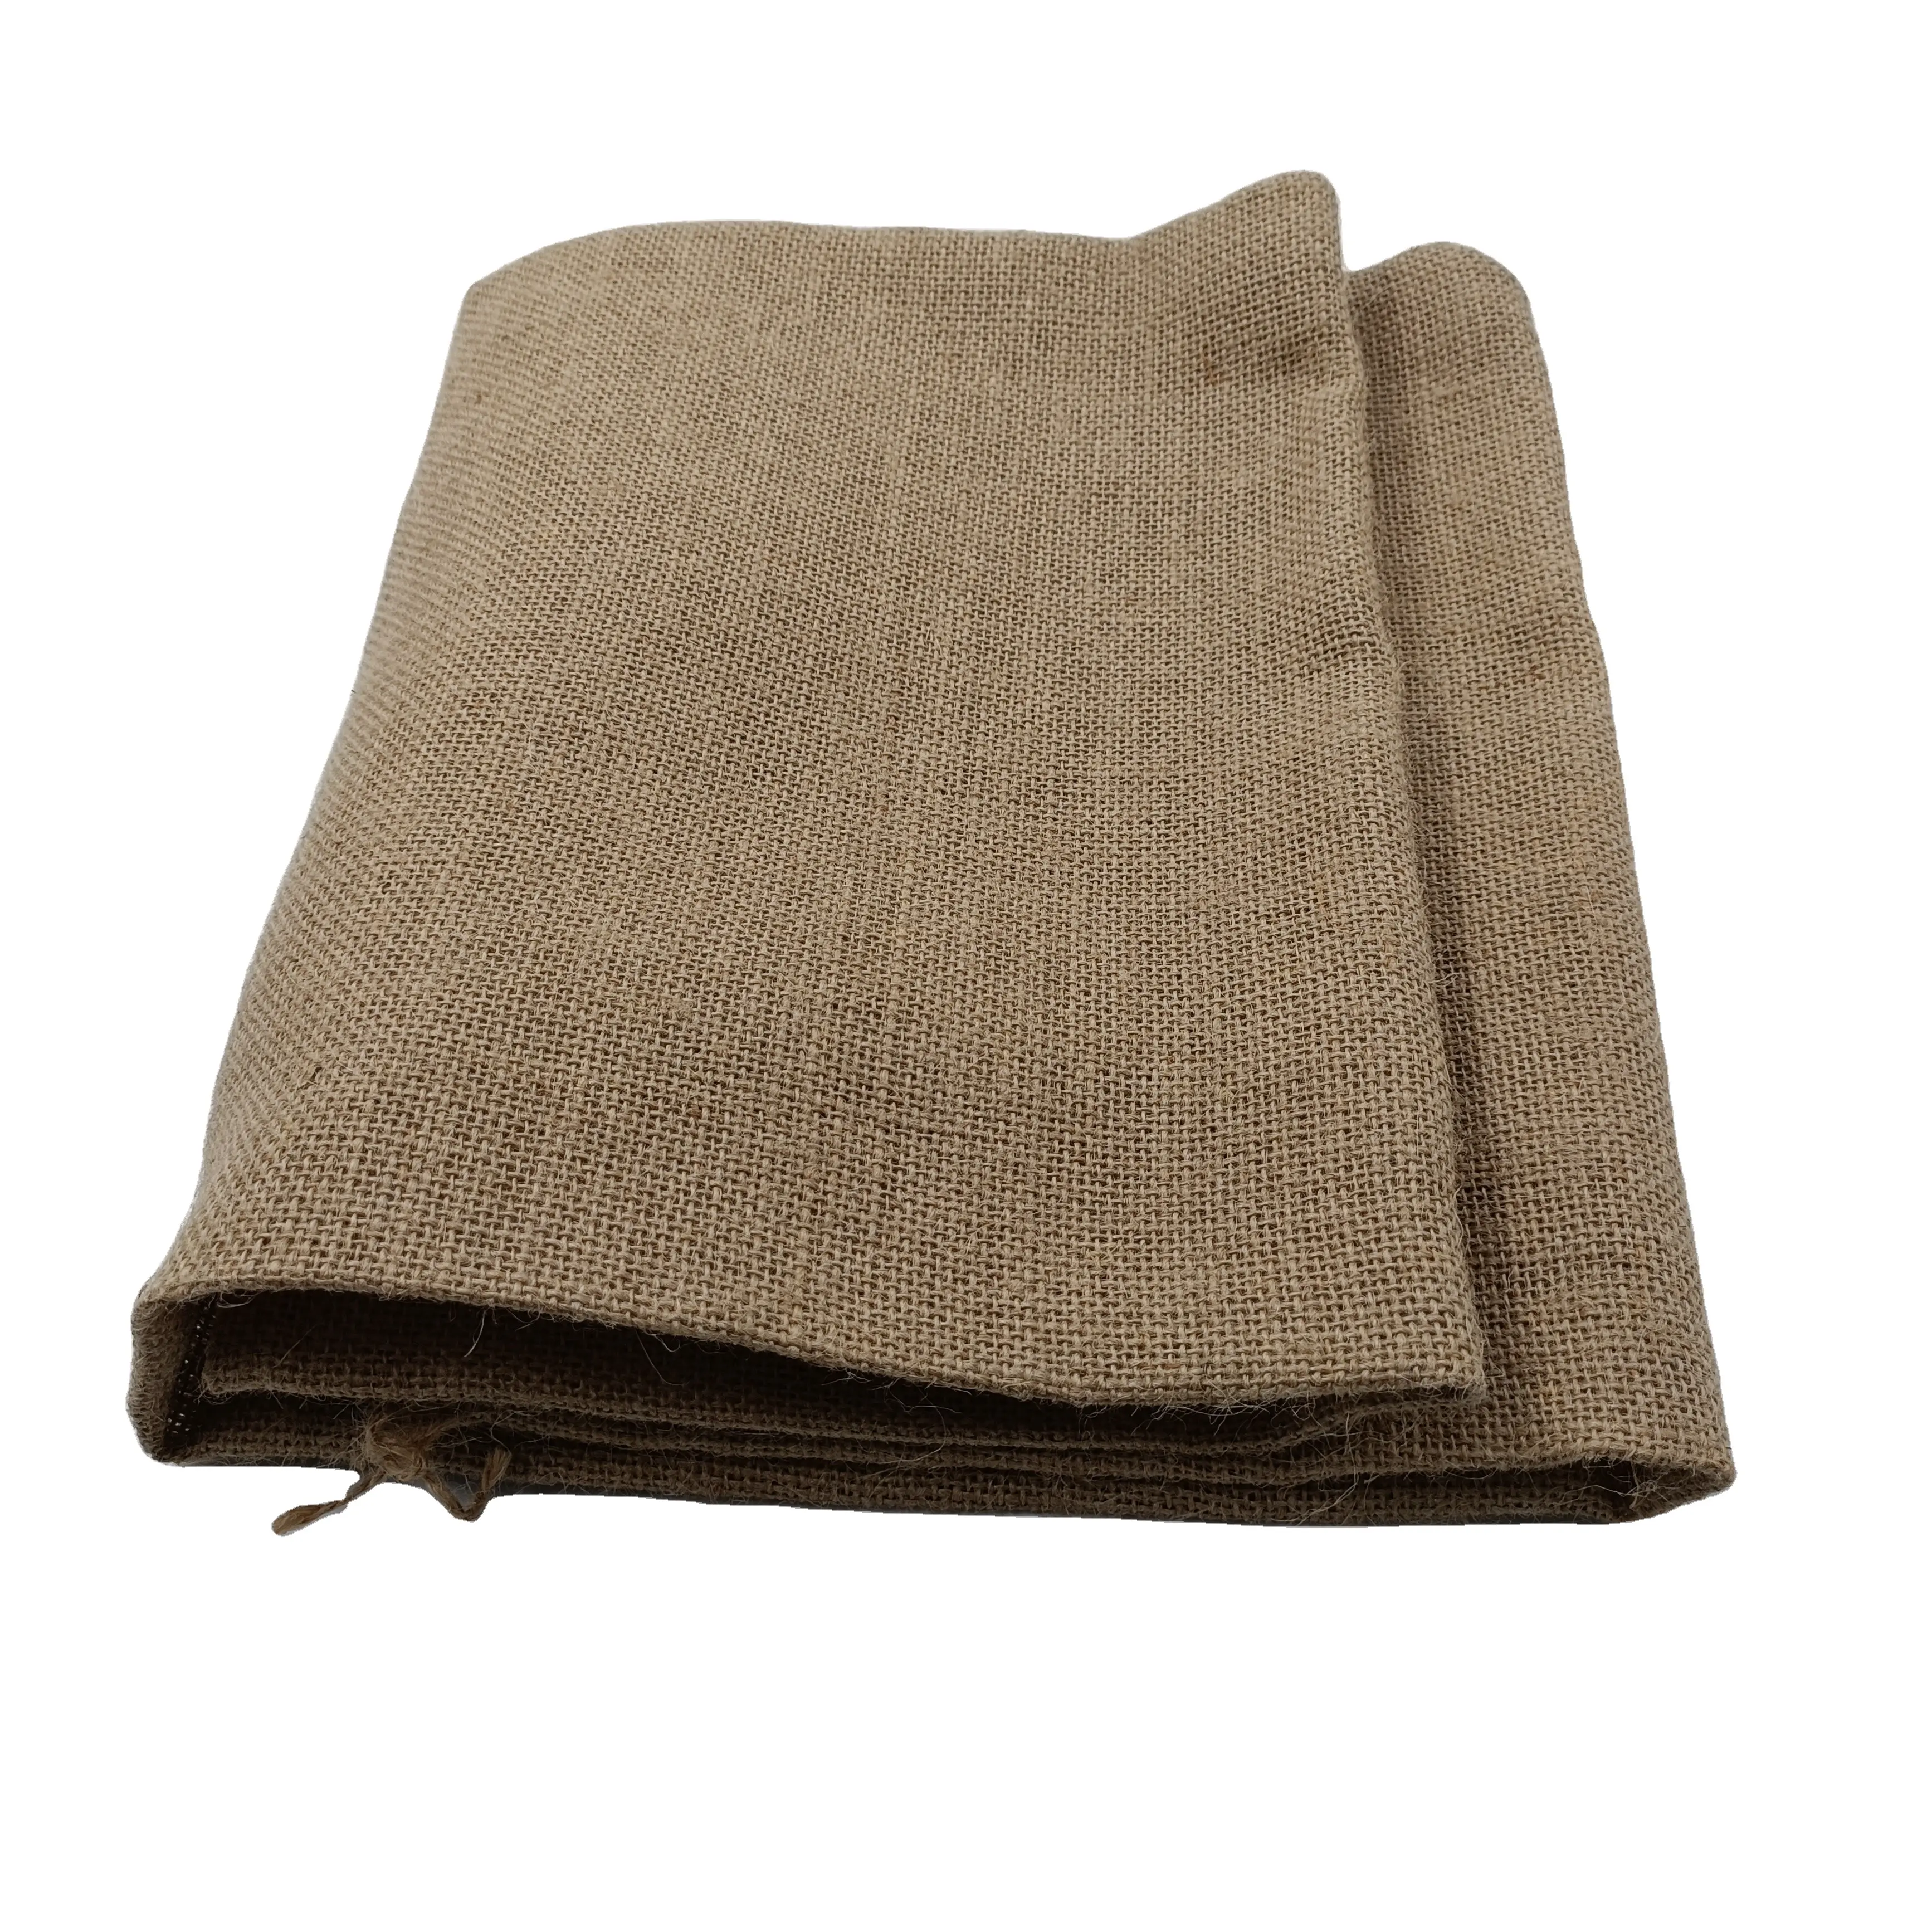 Size-customizable Burlap Sack Pollution-free Sustainable Hessian Sack